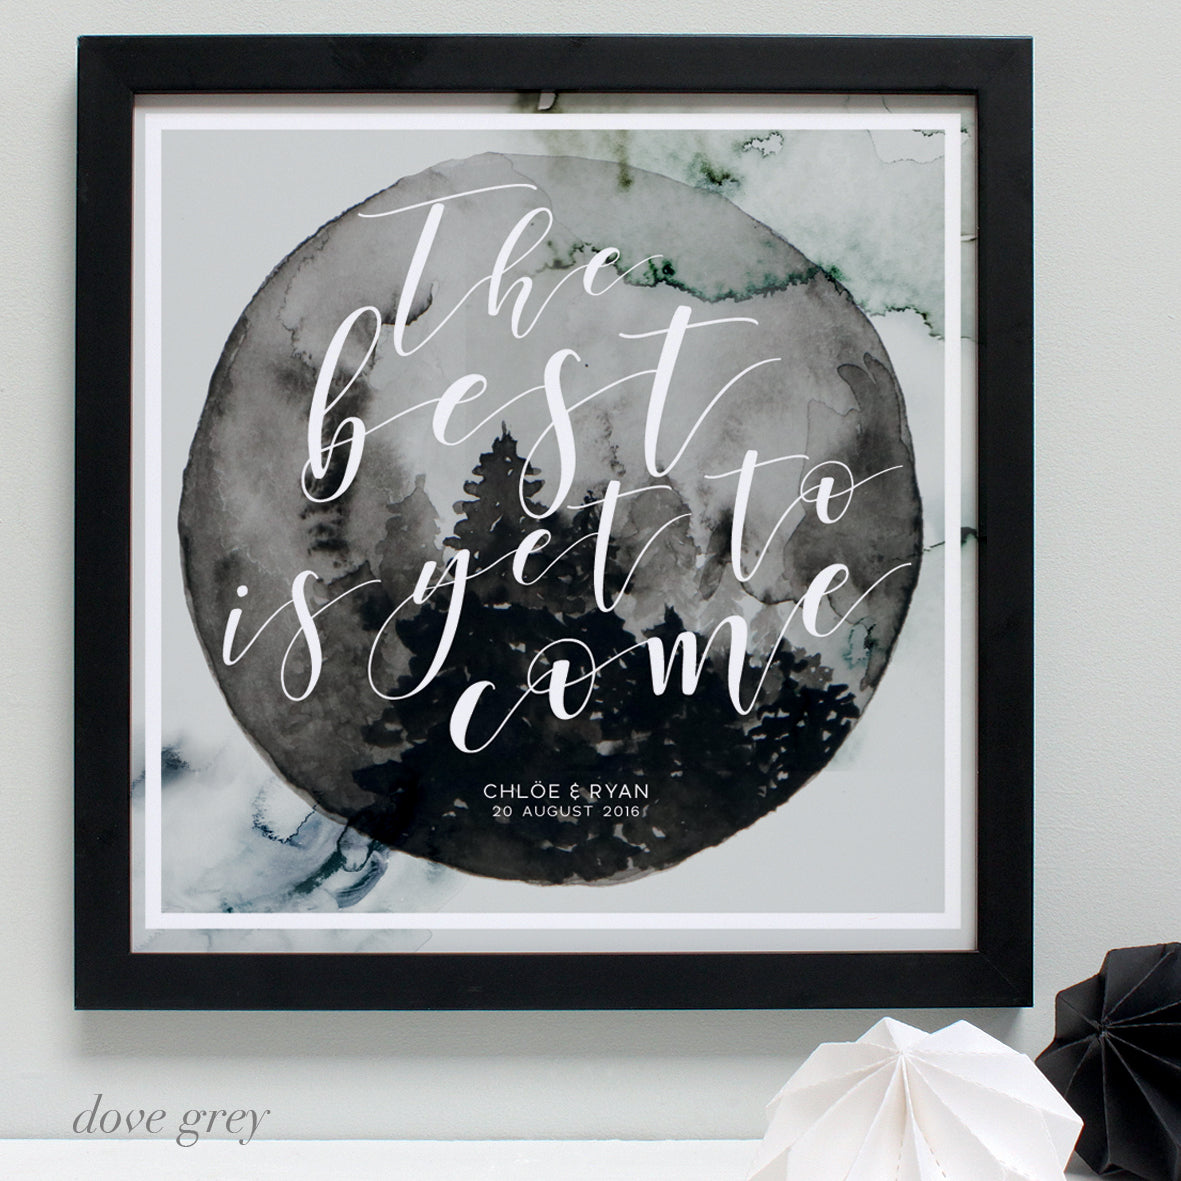 dove grey personalised anniversary print, black frame